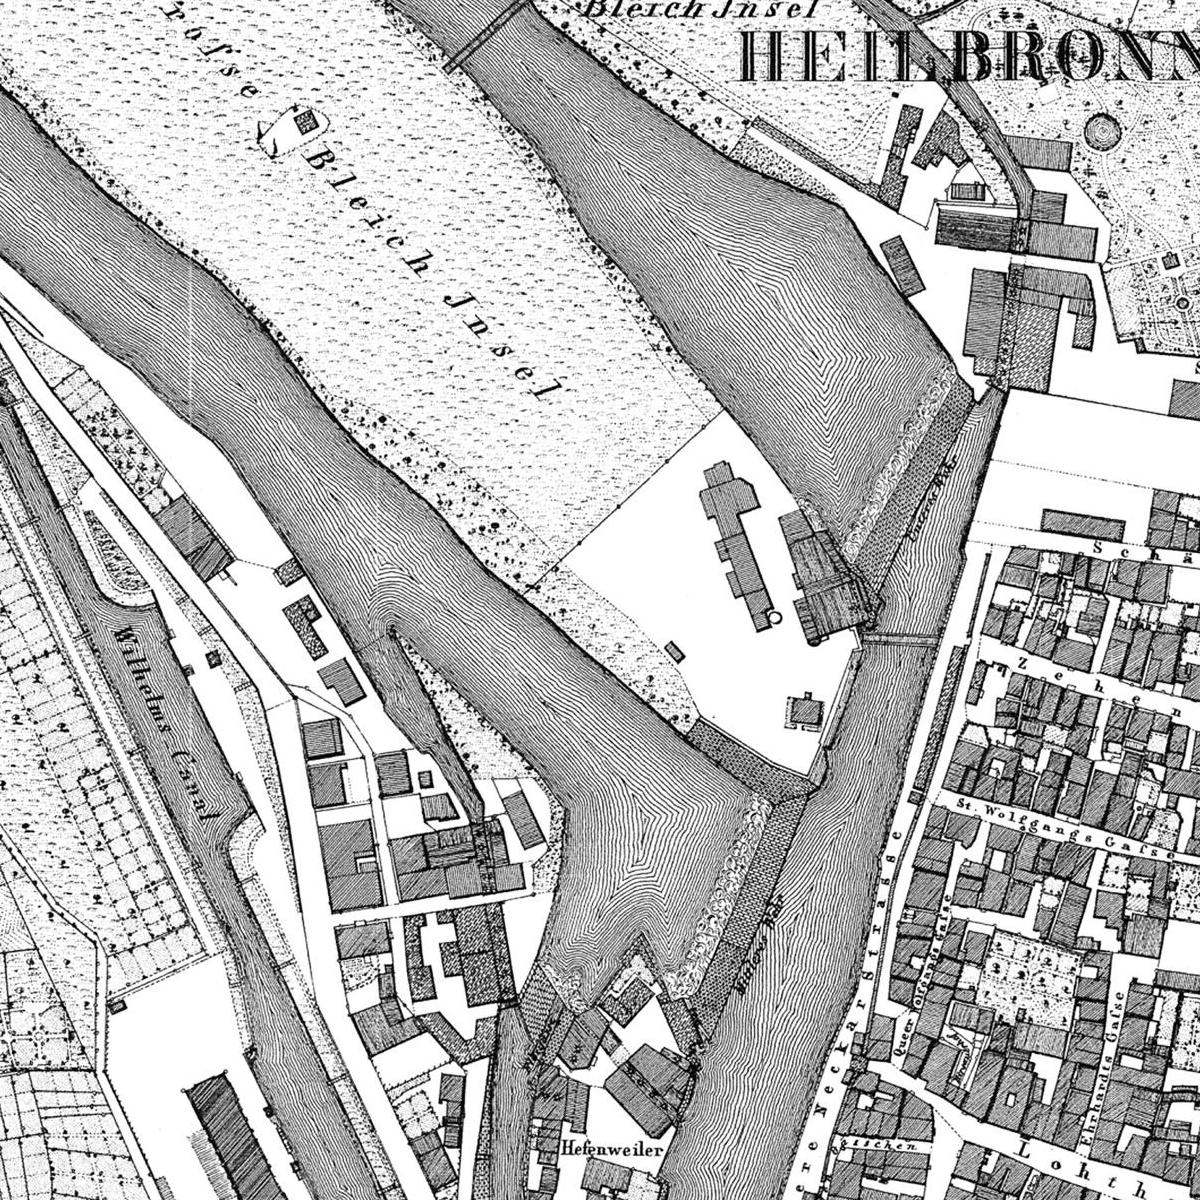 Historische Stadtansicht Heilbronn um 1834